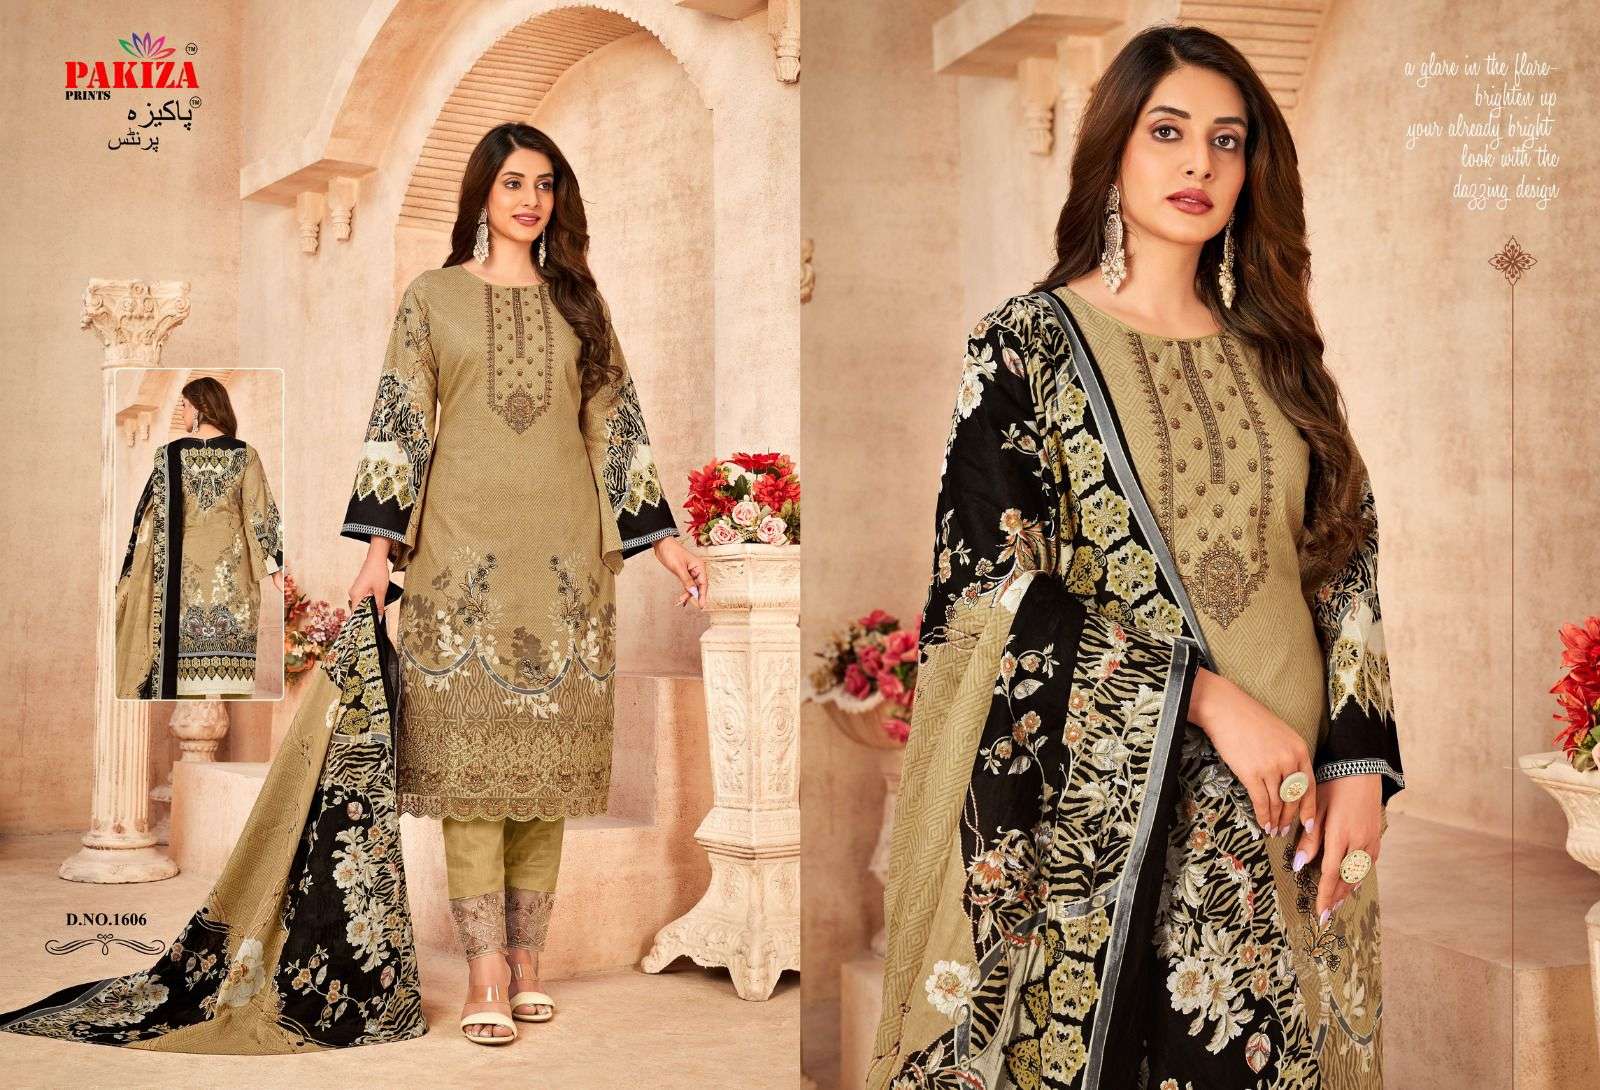 pakiza prints gulal vol-16 1601-1610 series trendy designer salwar kameez dress material manufacturer surat 